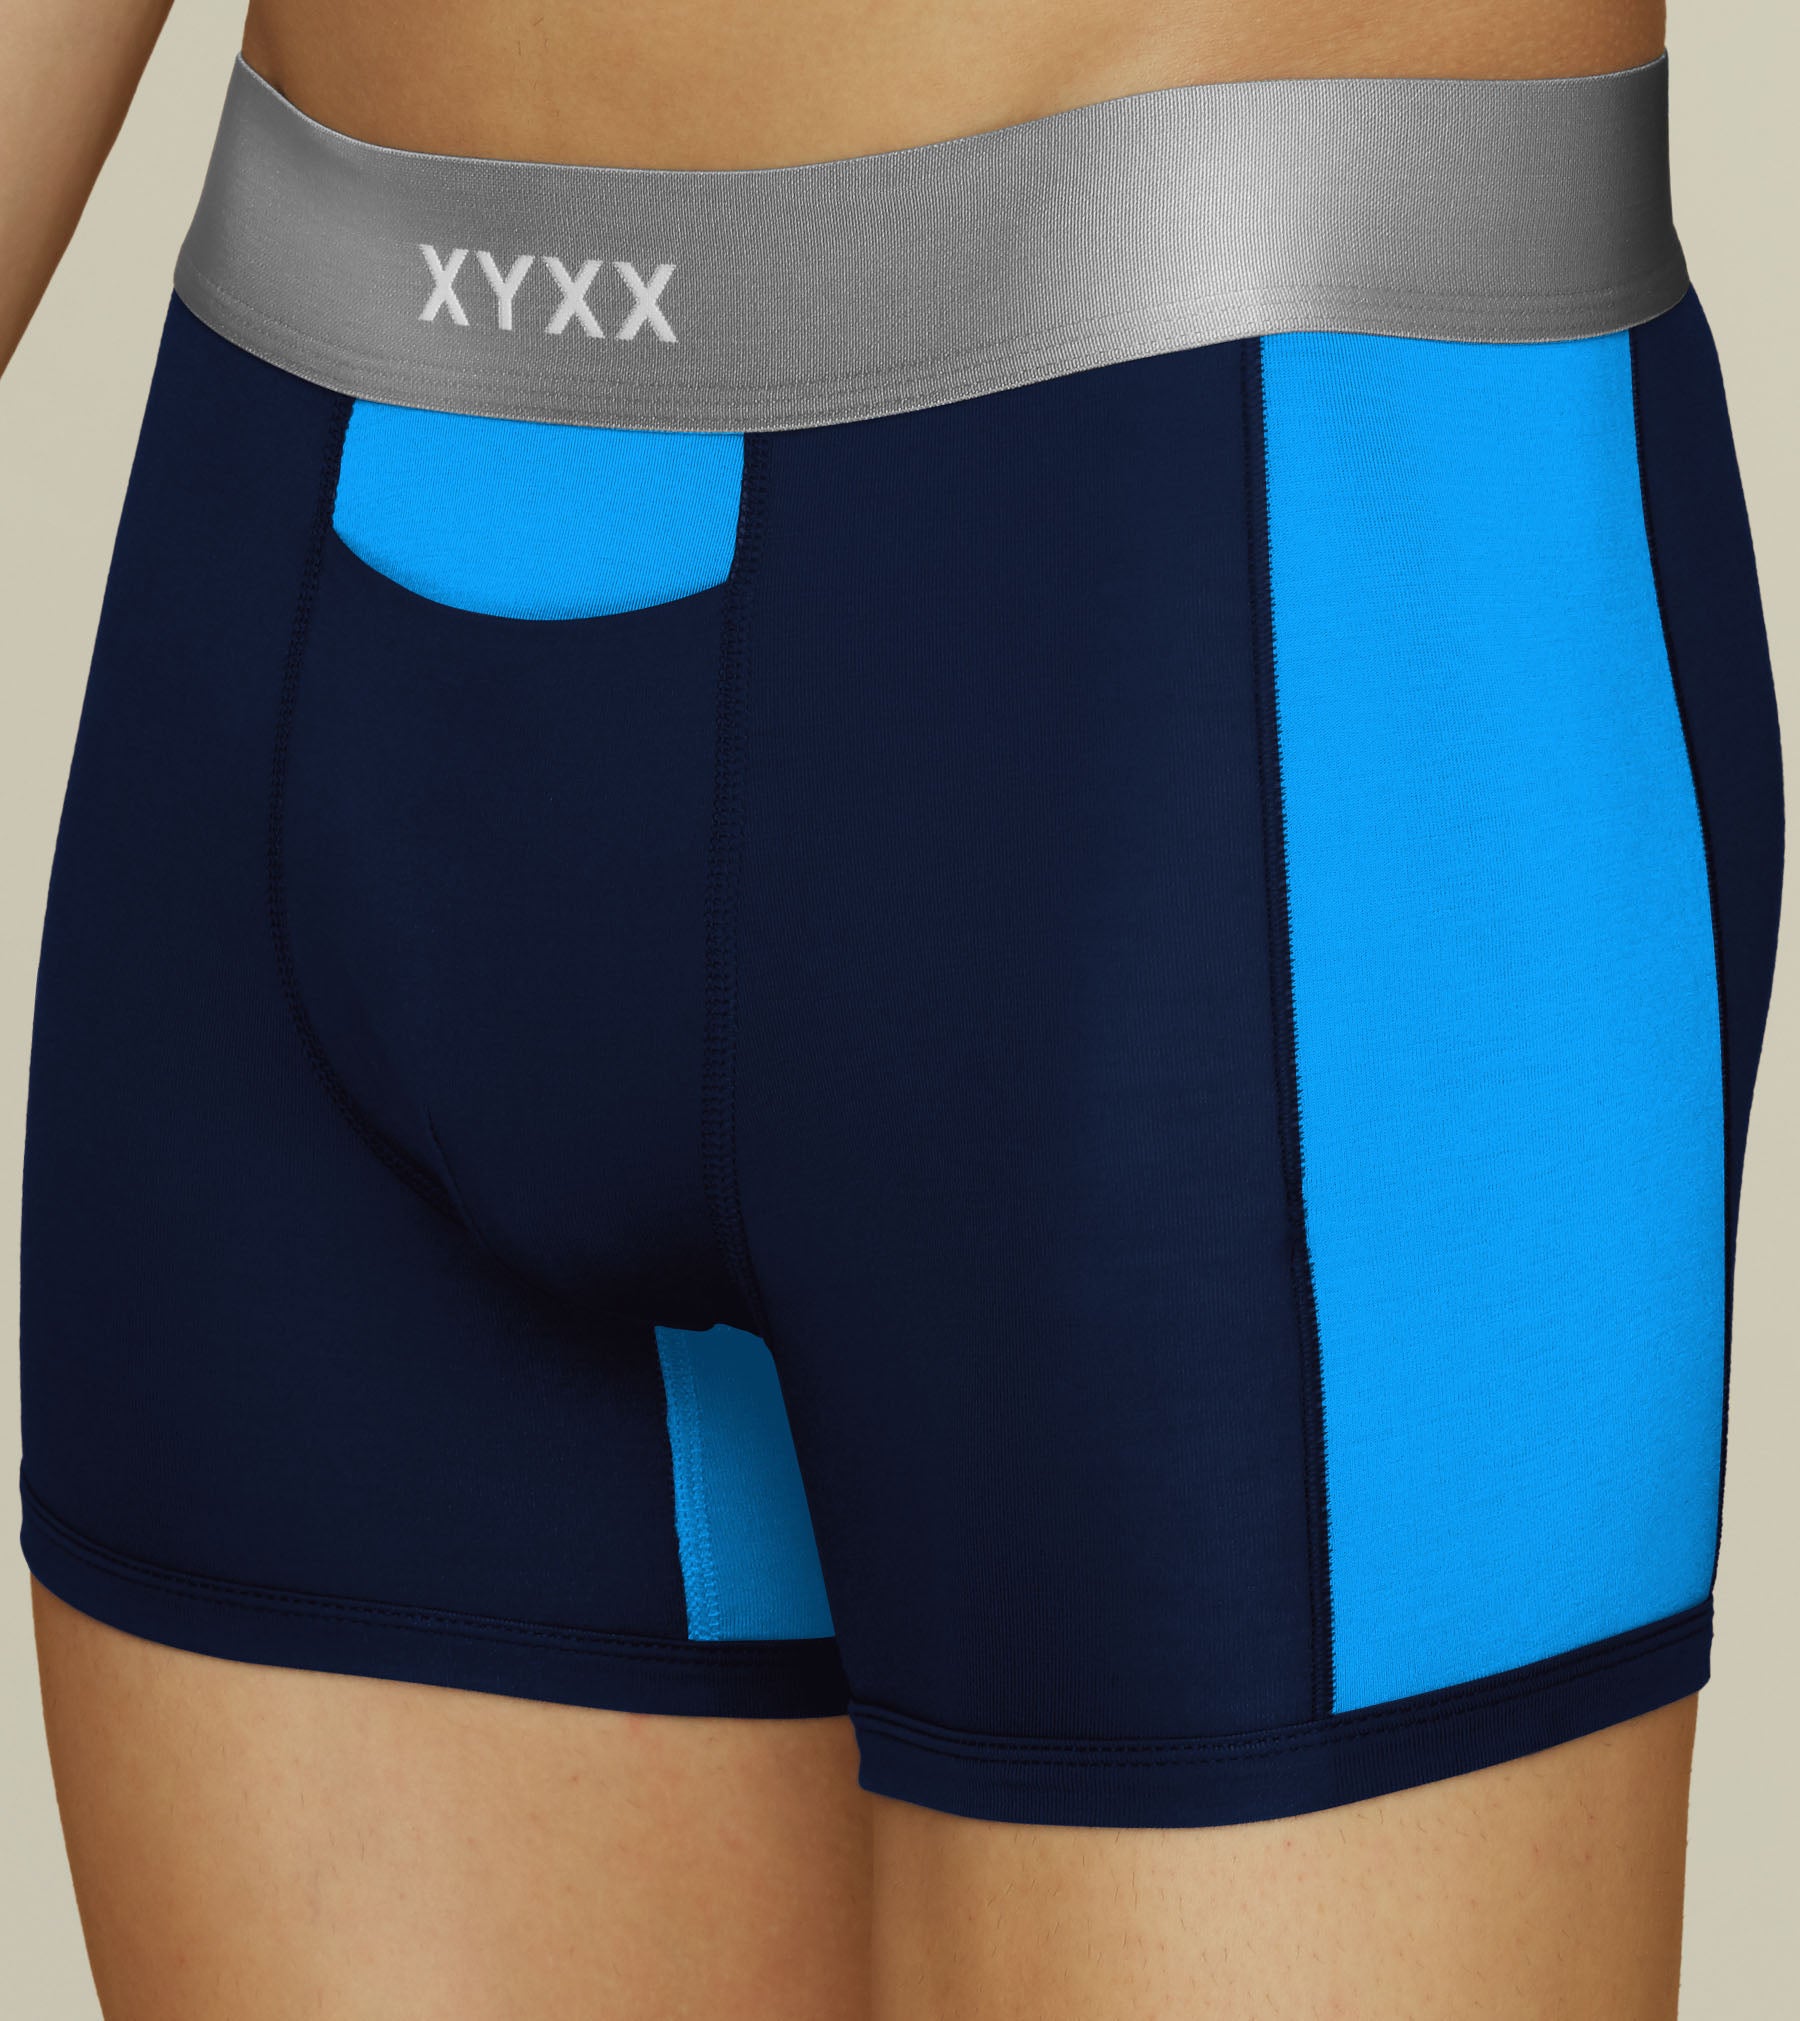 Illuminati Modal Trunks For Men Pack of 3 (Light Blue, Black, Blue) -  XYXX Mens Apparels